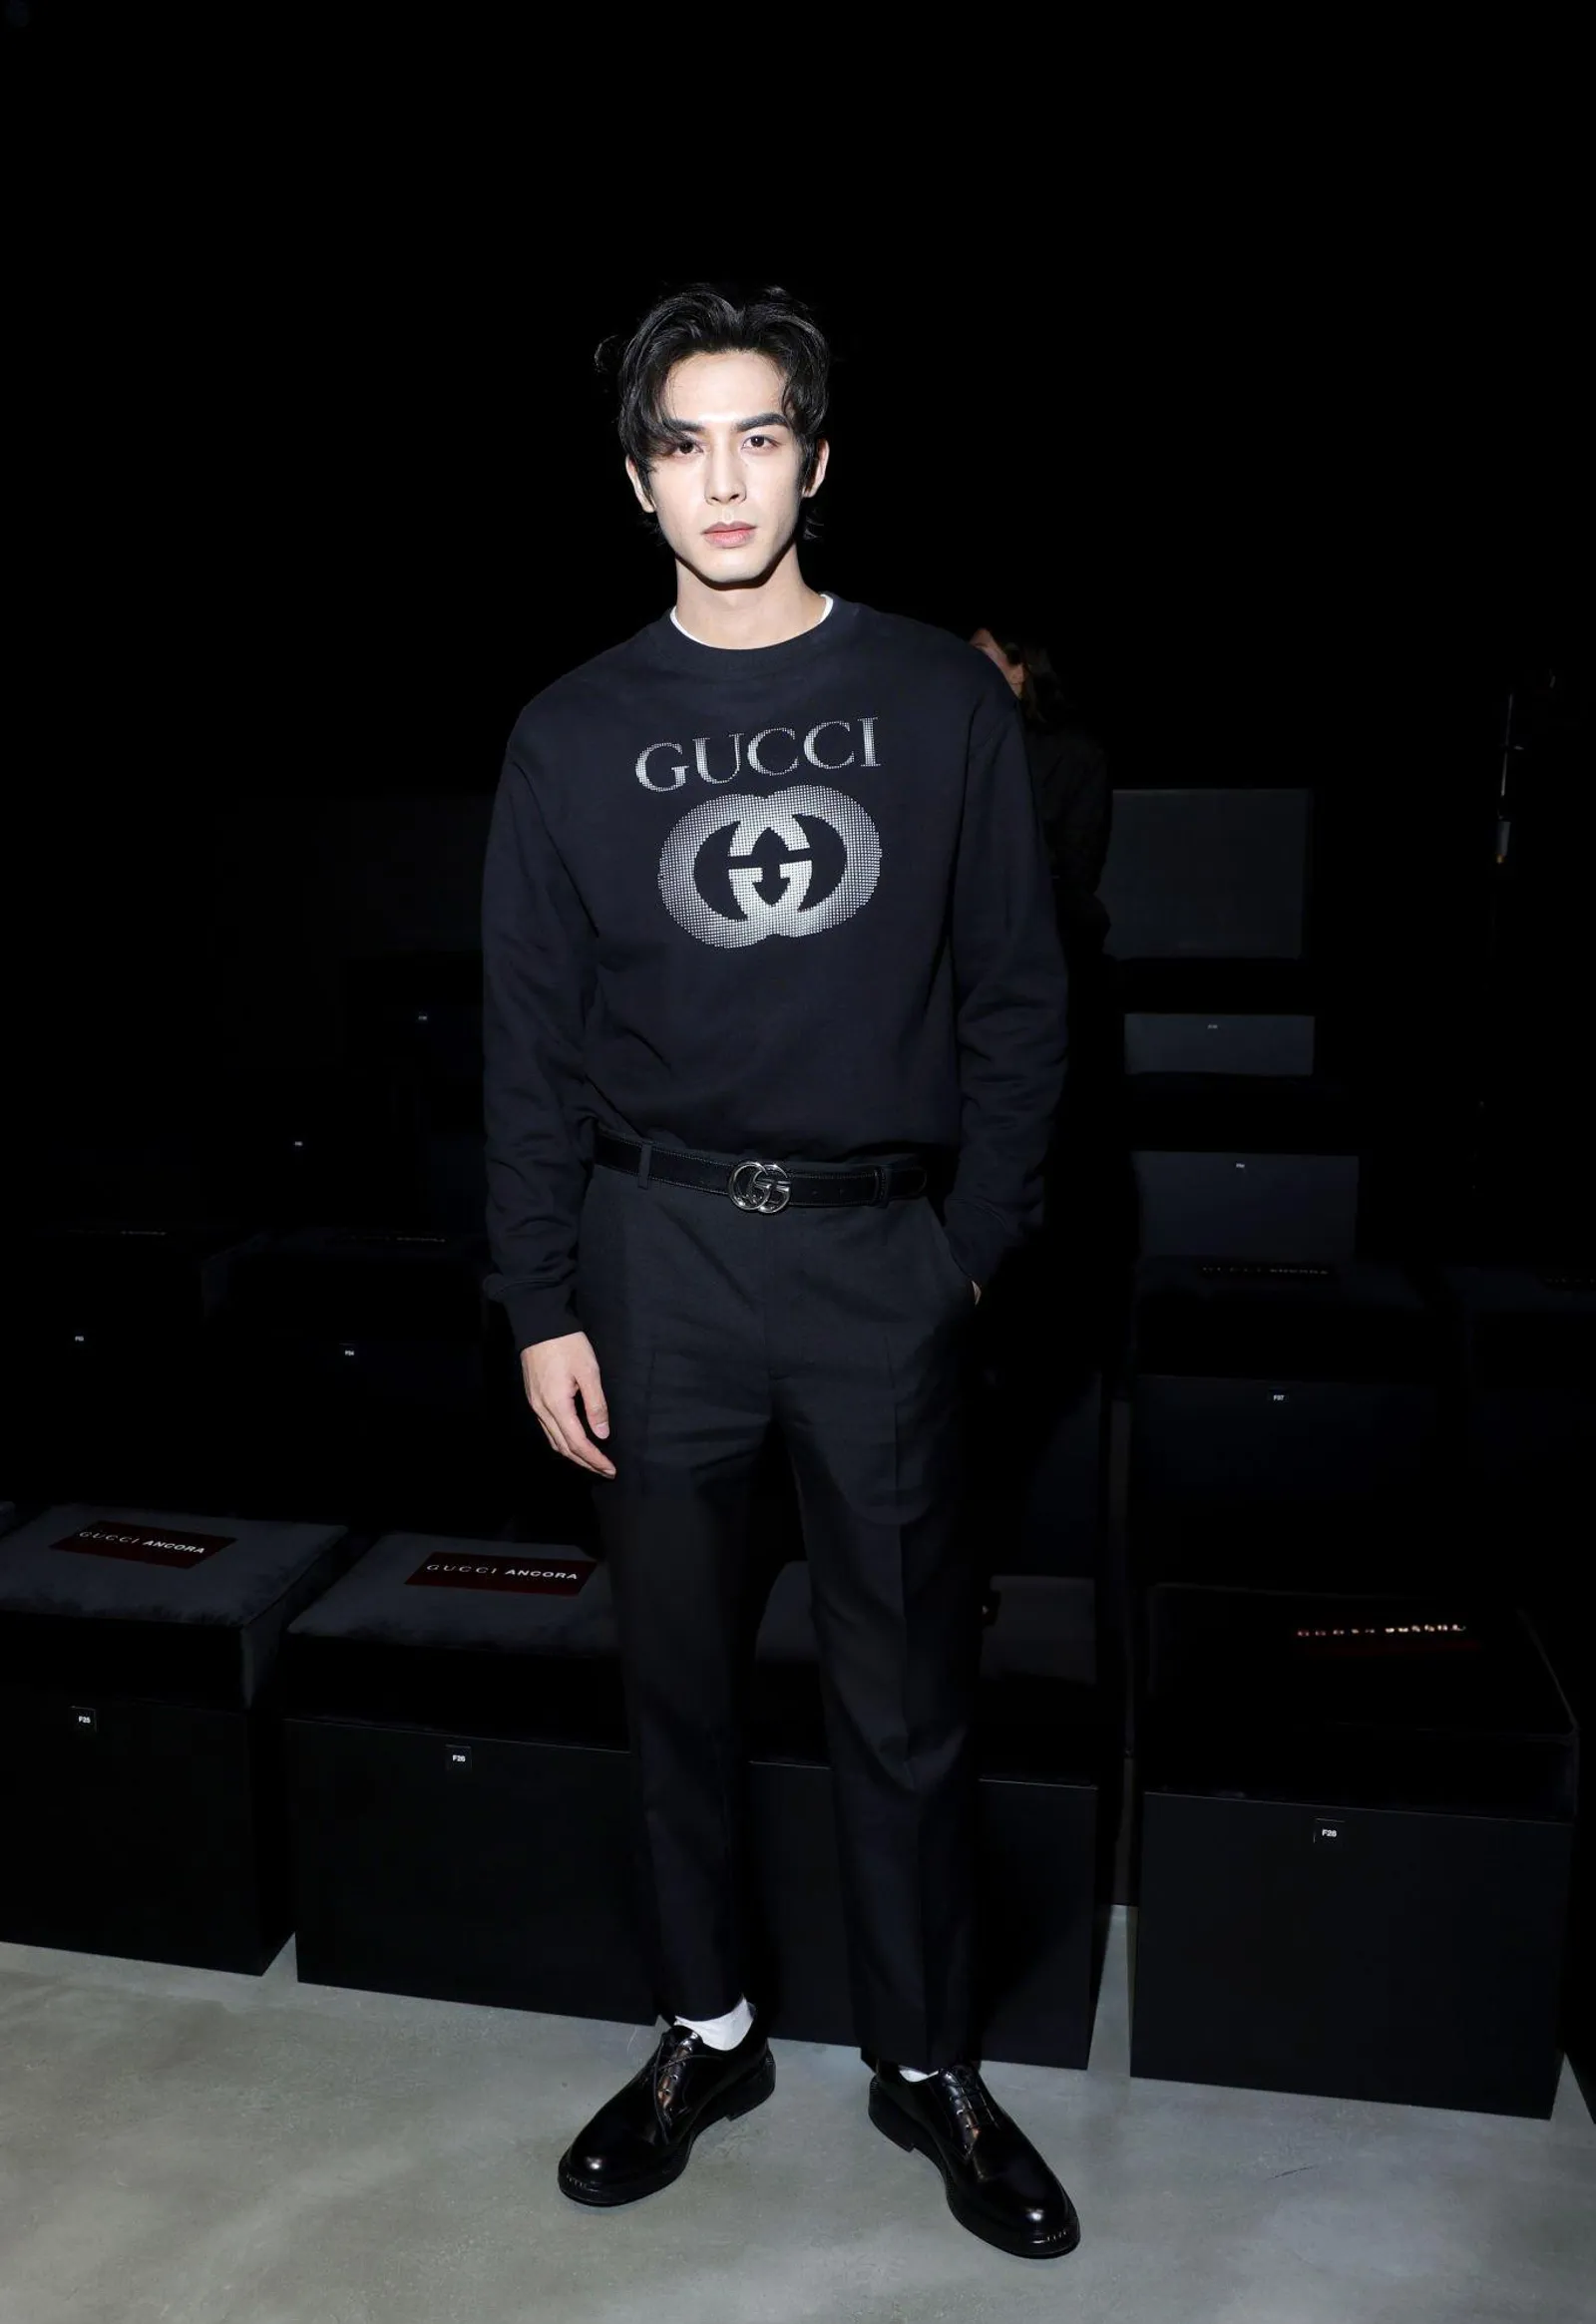 Gucci Gandeng Aktor Song Weilong sebagai Brand Ambassador Terbaru